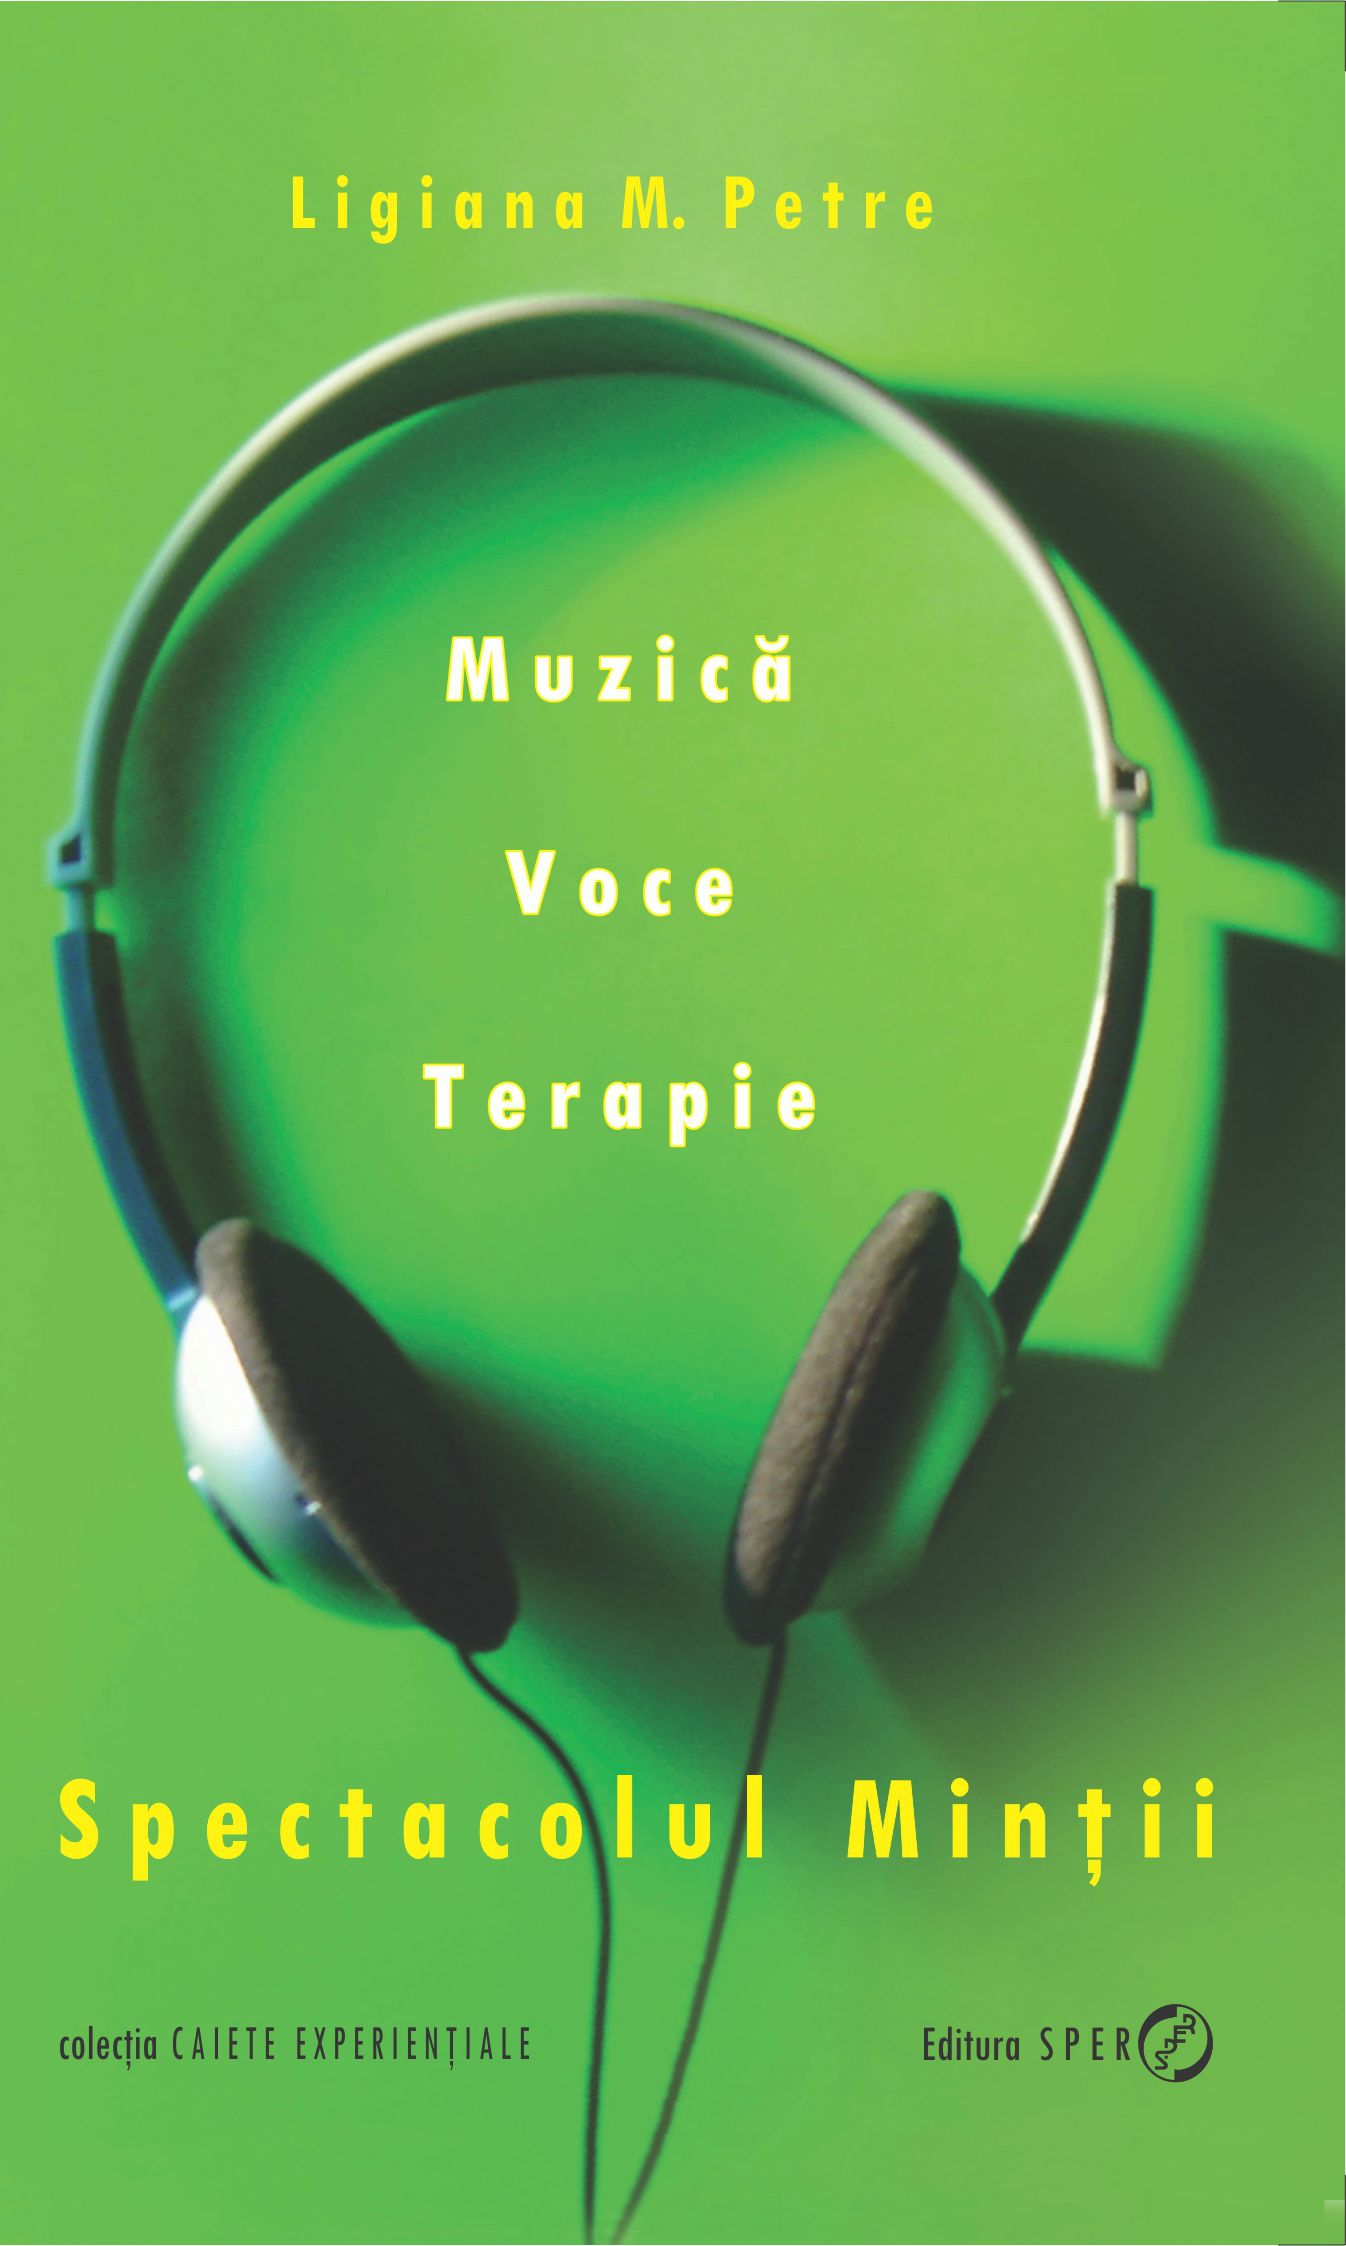 Spectacolul mintii. Muzica, voce, terapie - Ligiana M. Petre